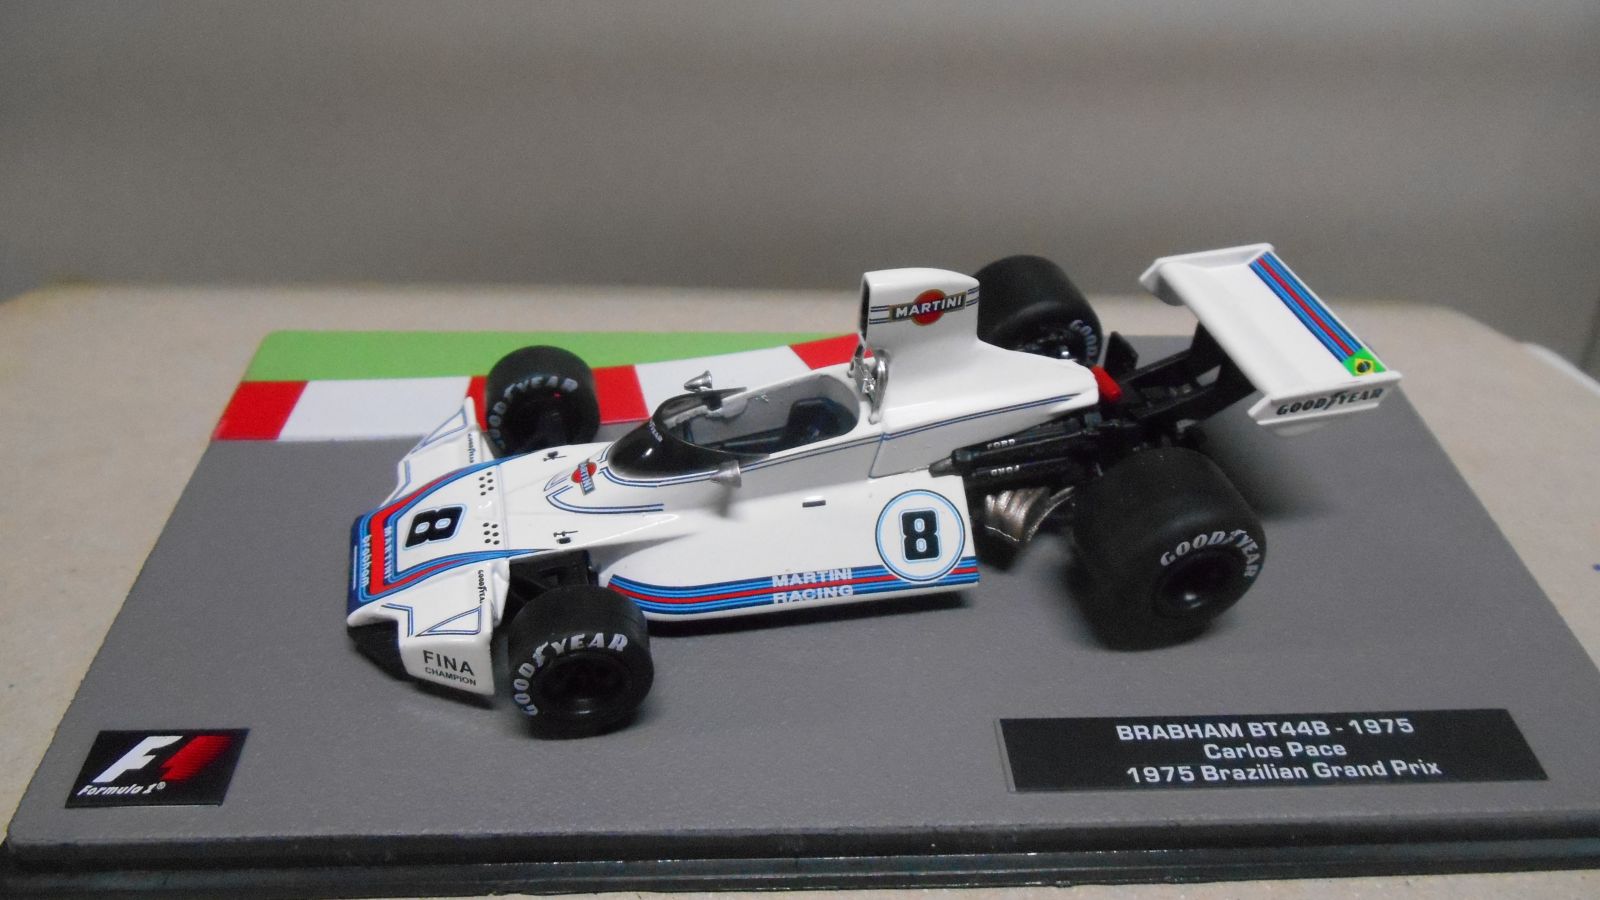 1975 Brazilian Grand Prix Carlos Pace: Carlos Pace